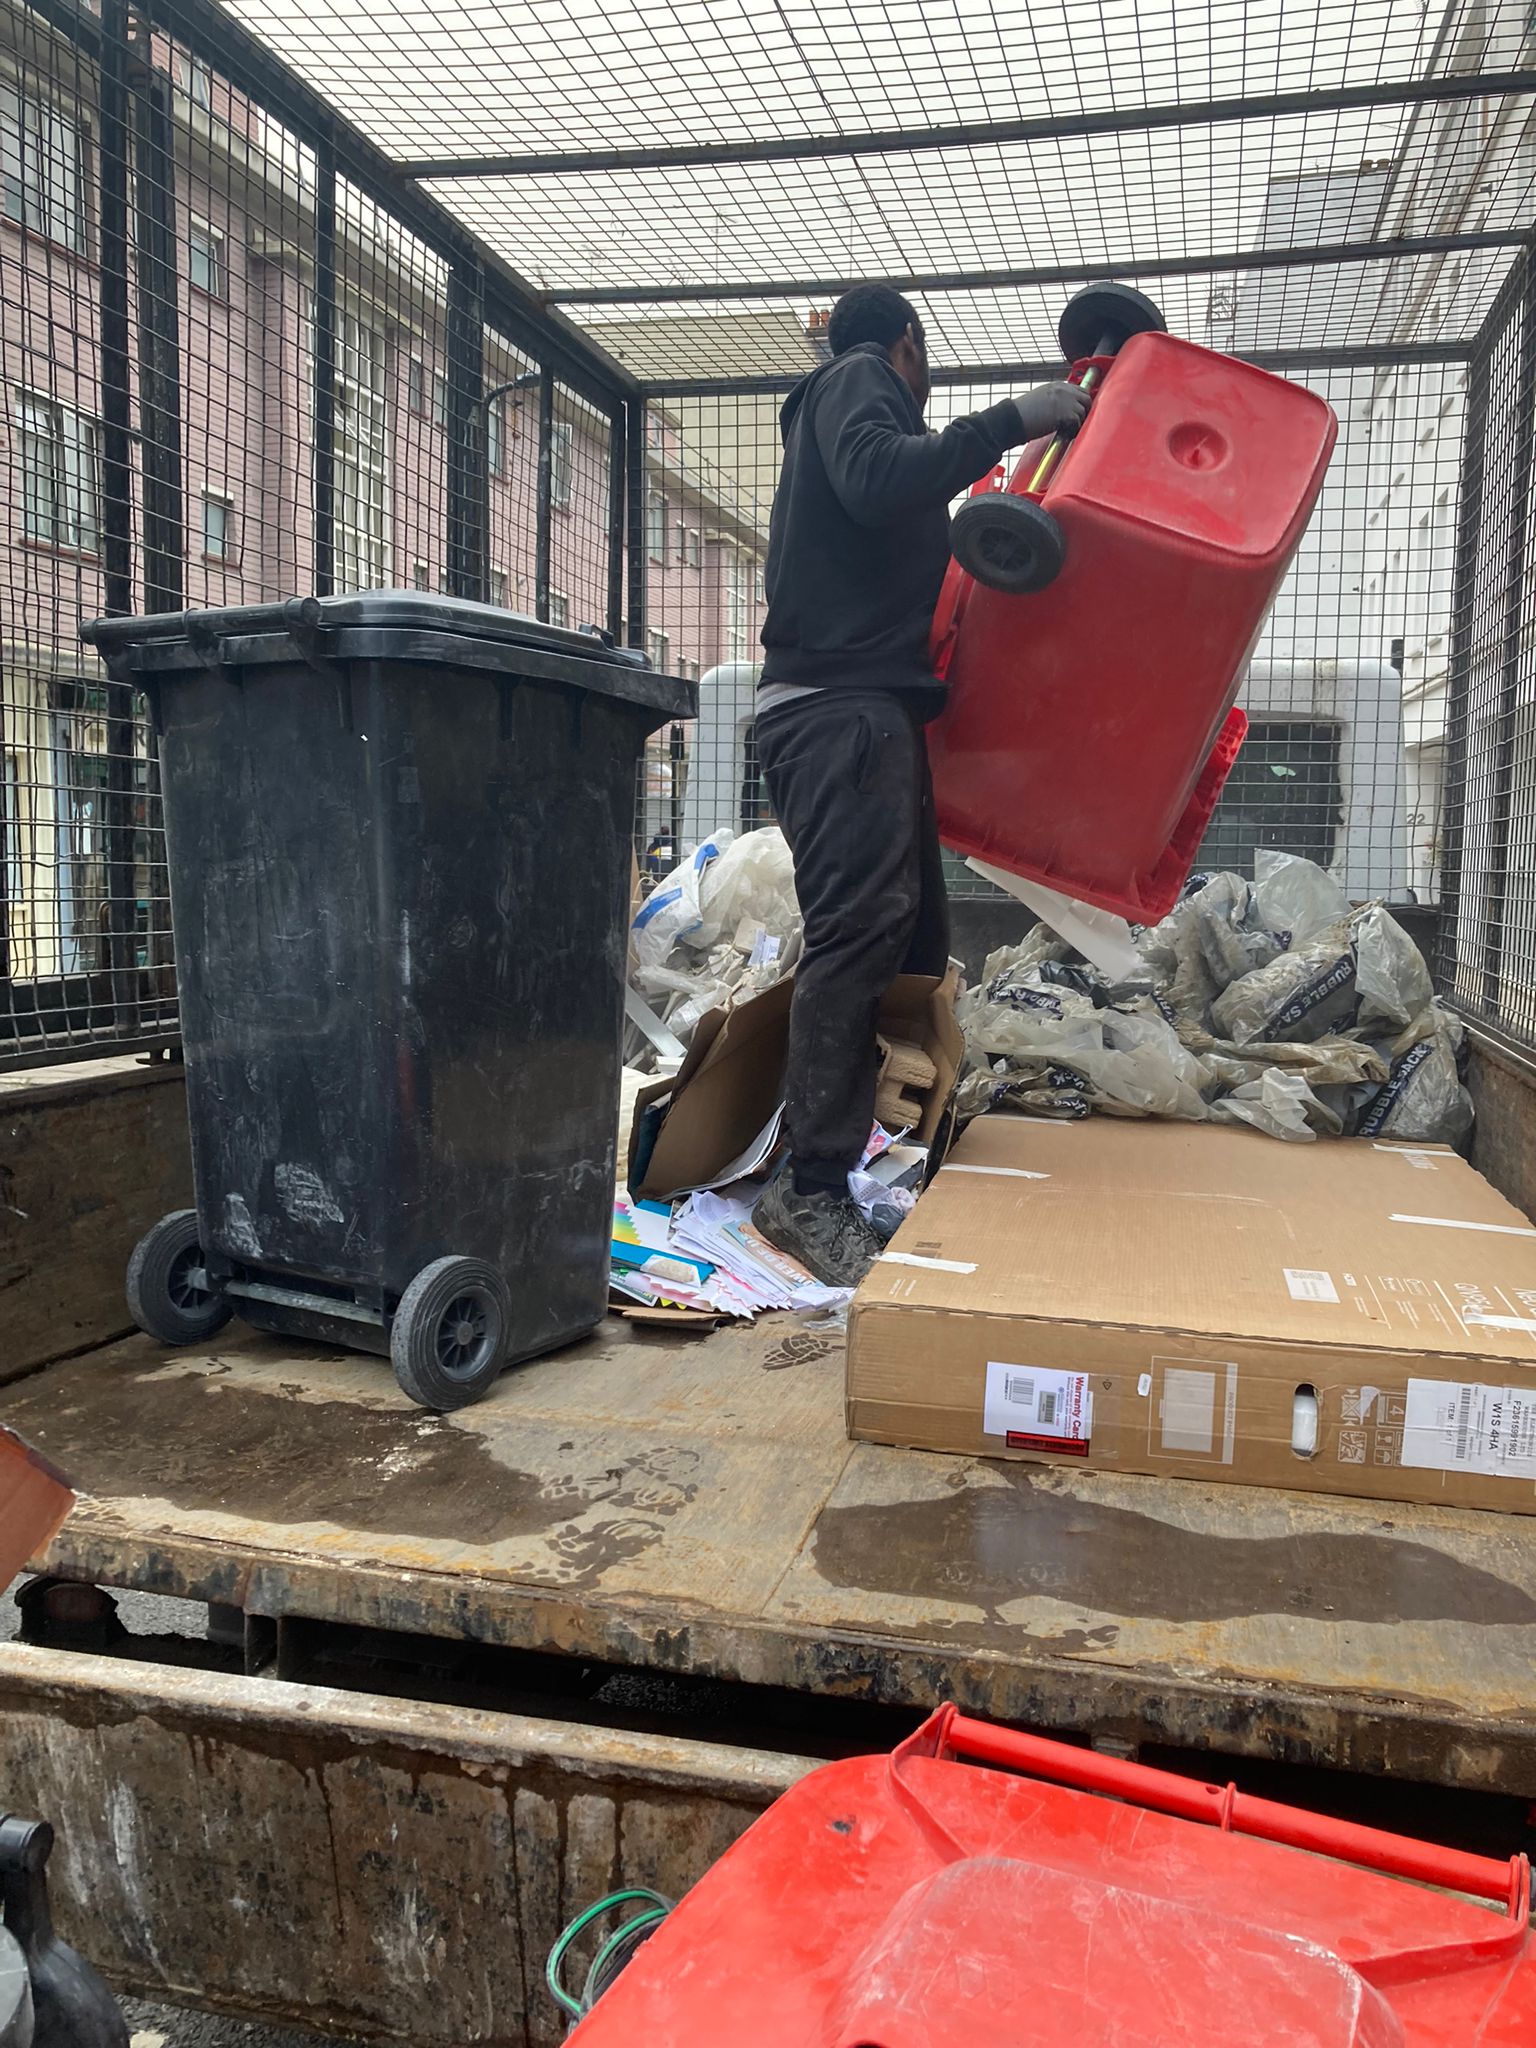 Professional rubbish removal services in Essex